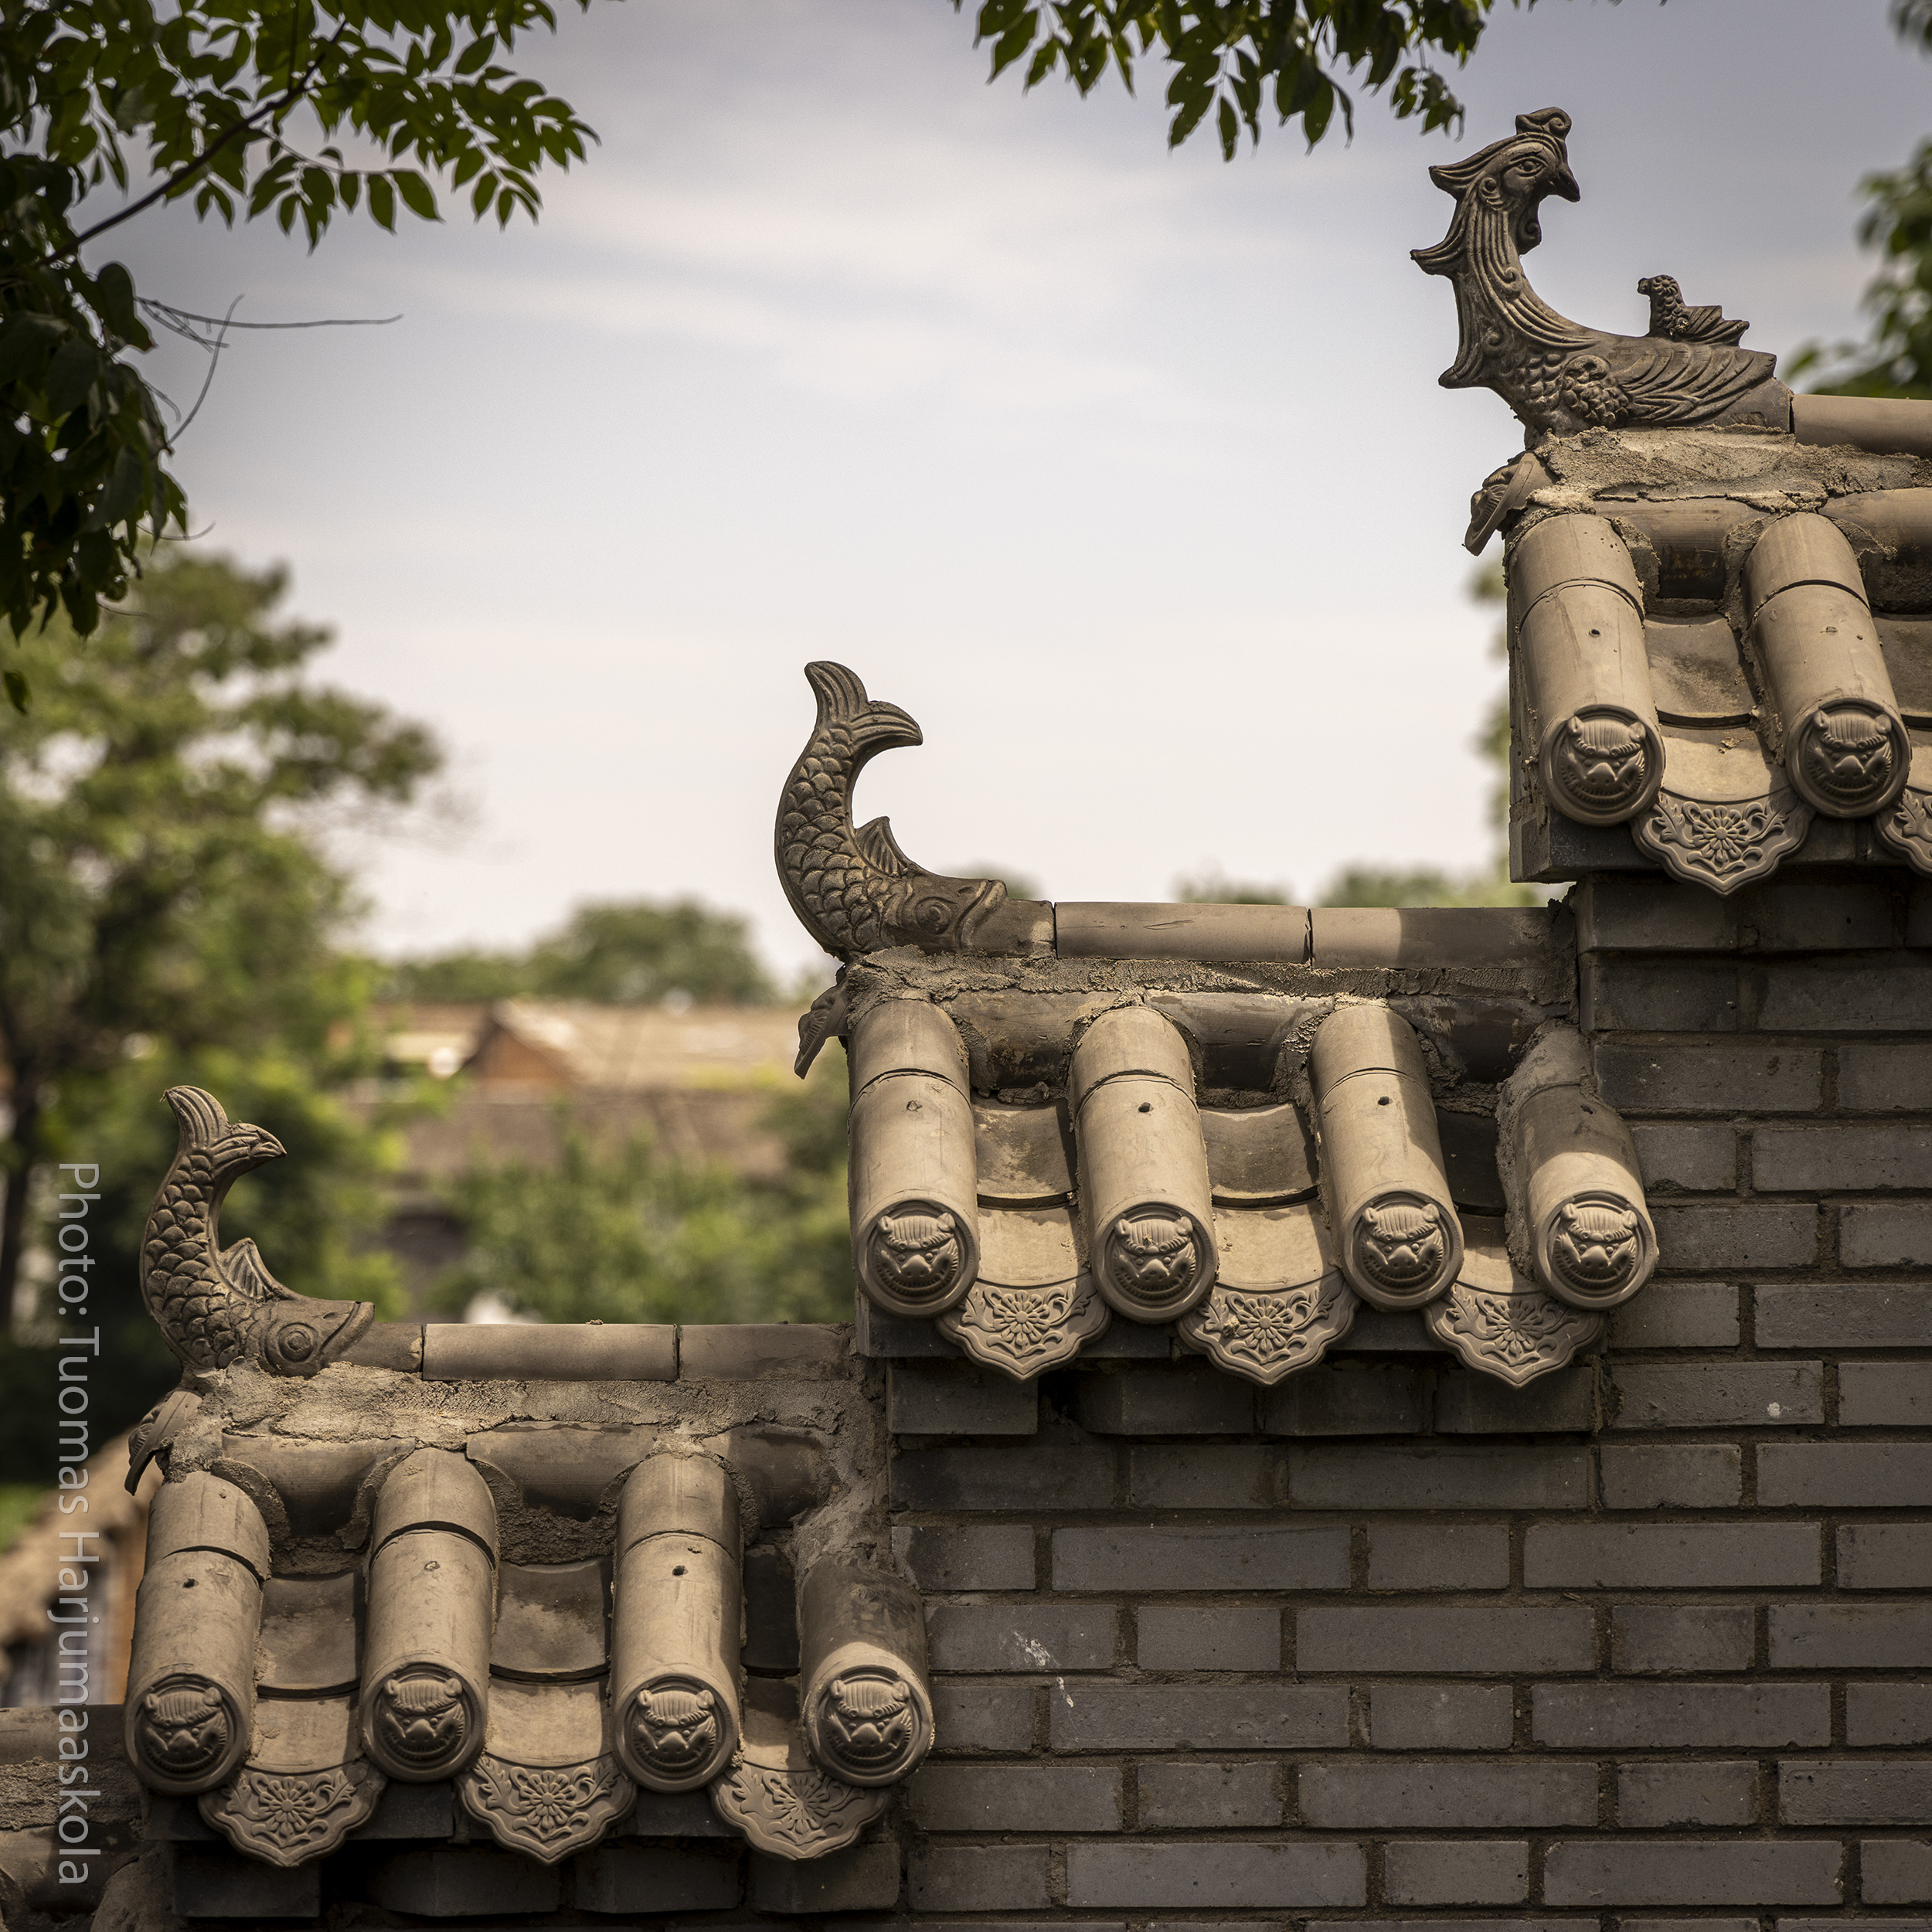 Decorative Chinese eaves on top of a fence. Photographer Tuomas Harjumaaskola.